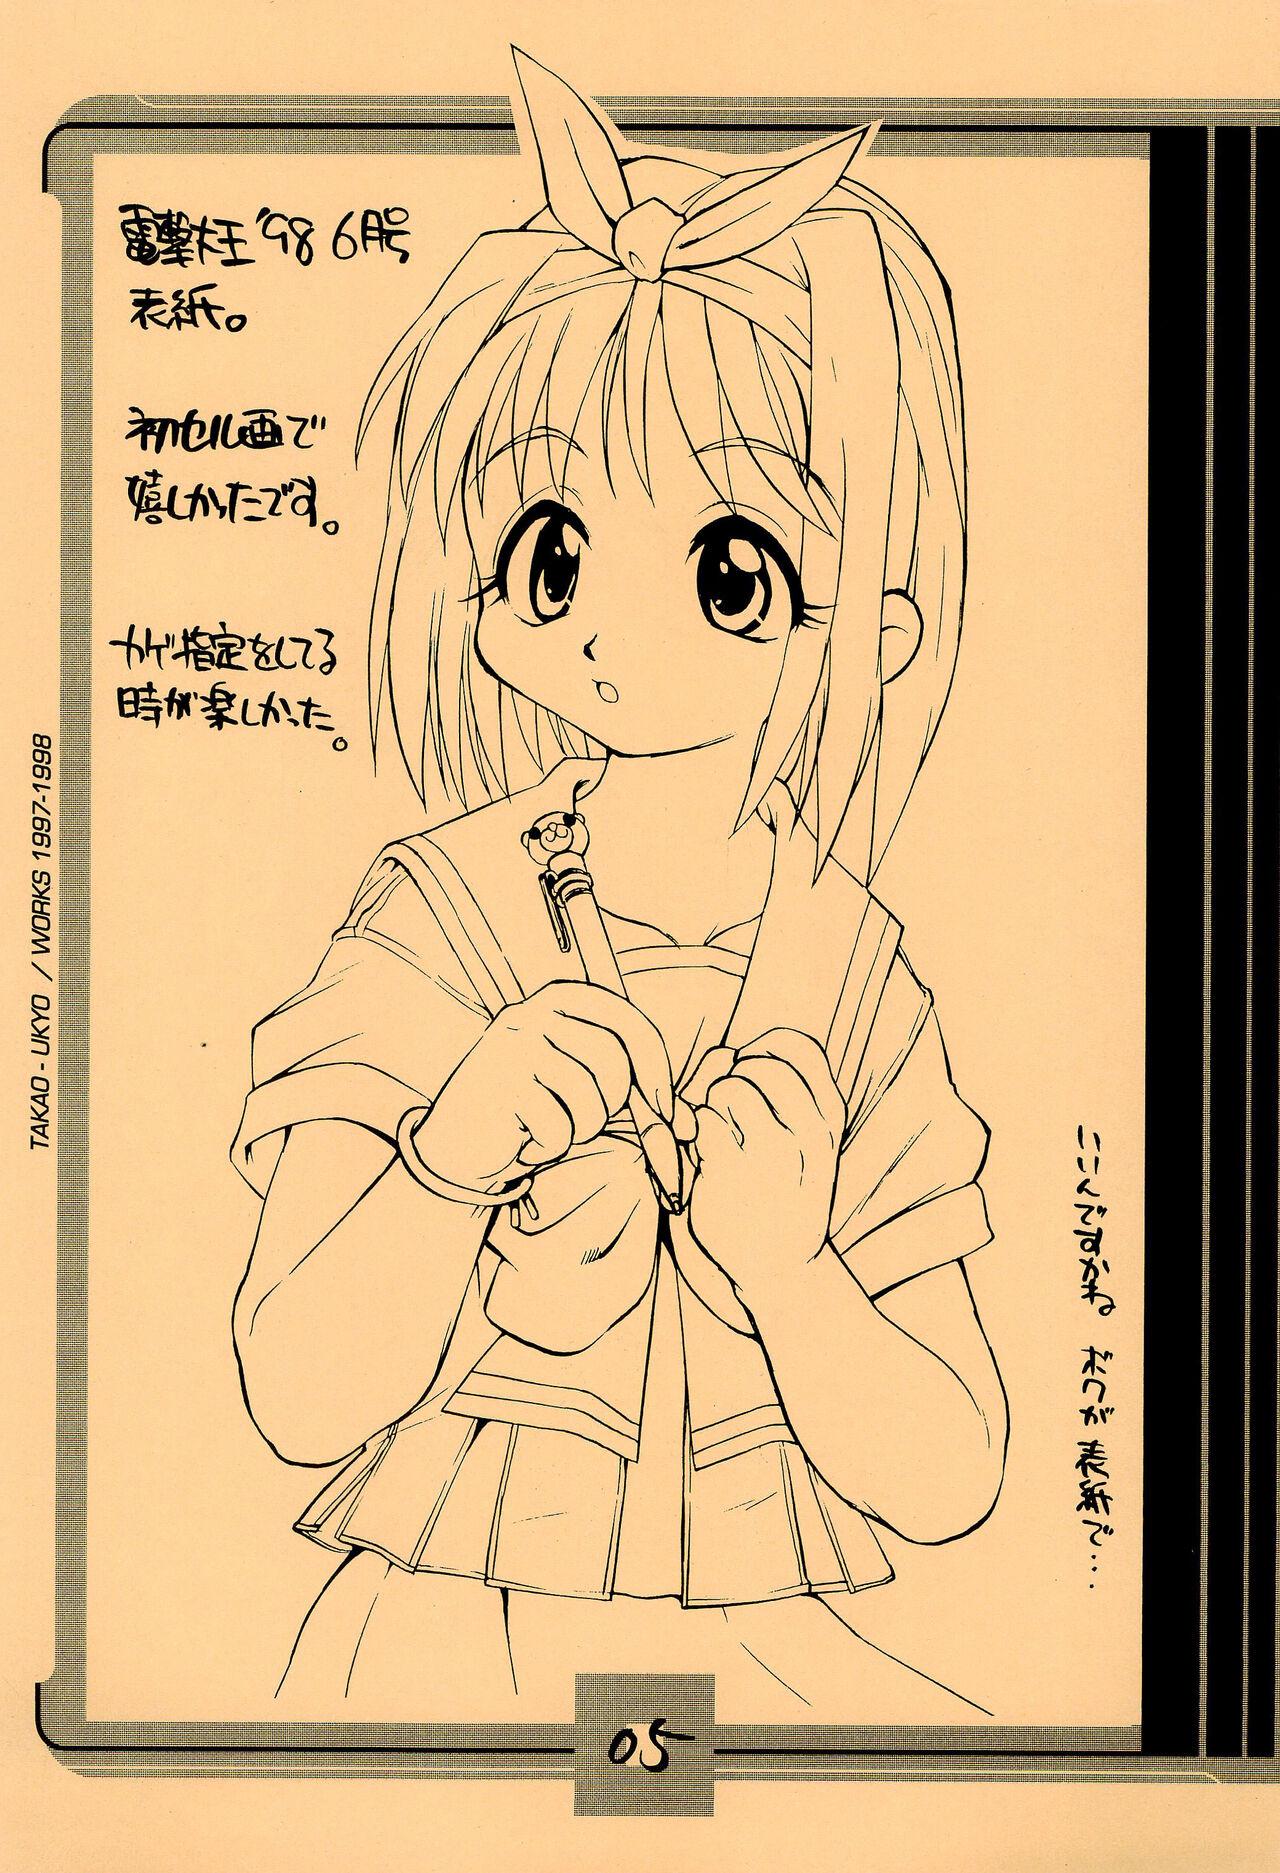 Ftv Girls Mamagult Katsudou Houkokusho Hikae 1997/11-1998/08 - To heart Fun fun pharmacy 10 carat torte Heels - Page 5